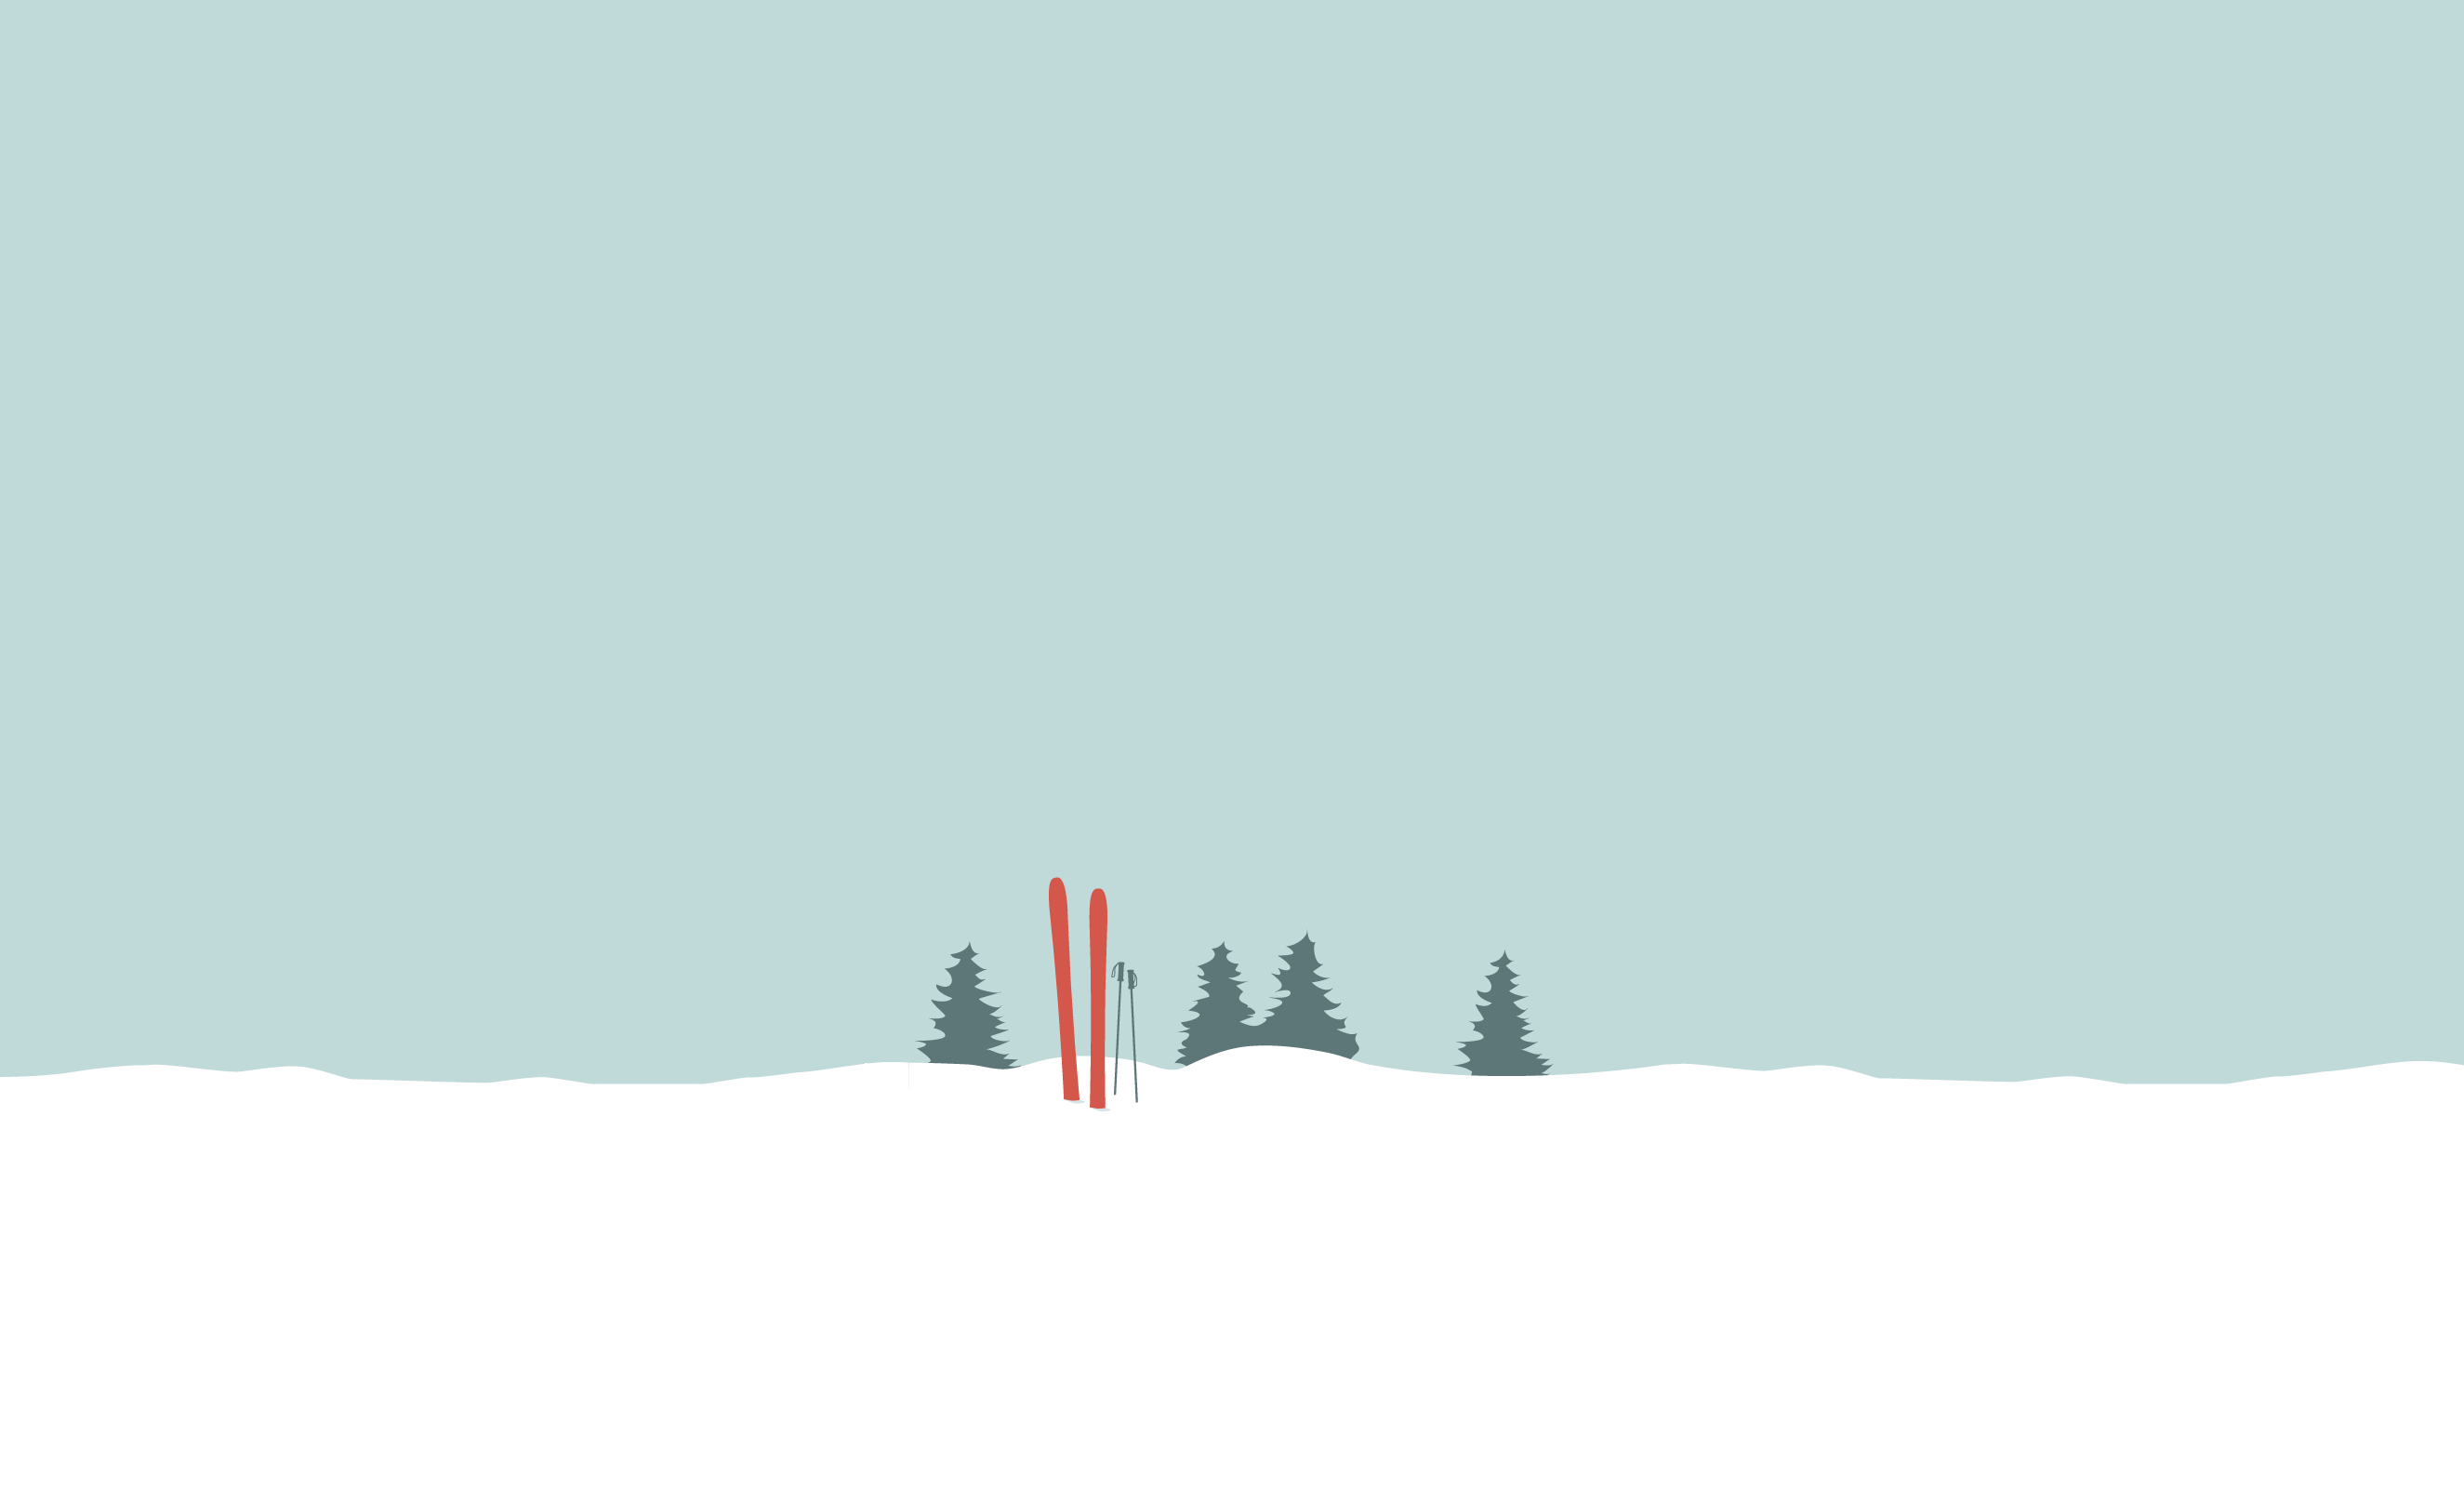 Winter desktop wallpaper graphic. Minimalist